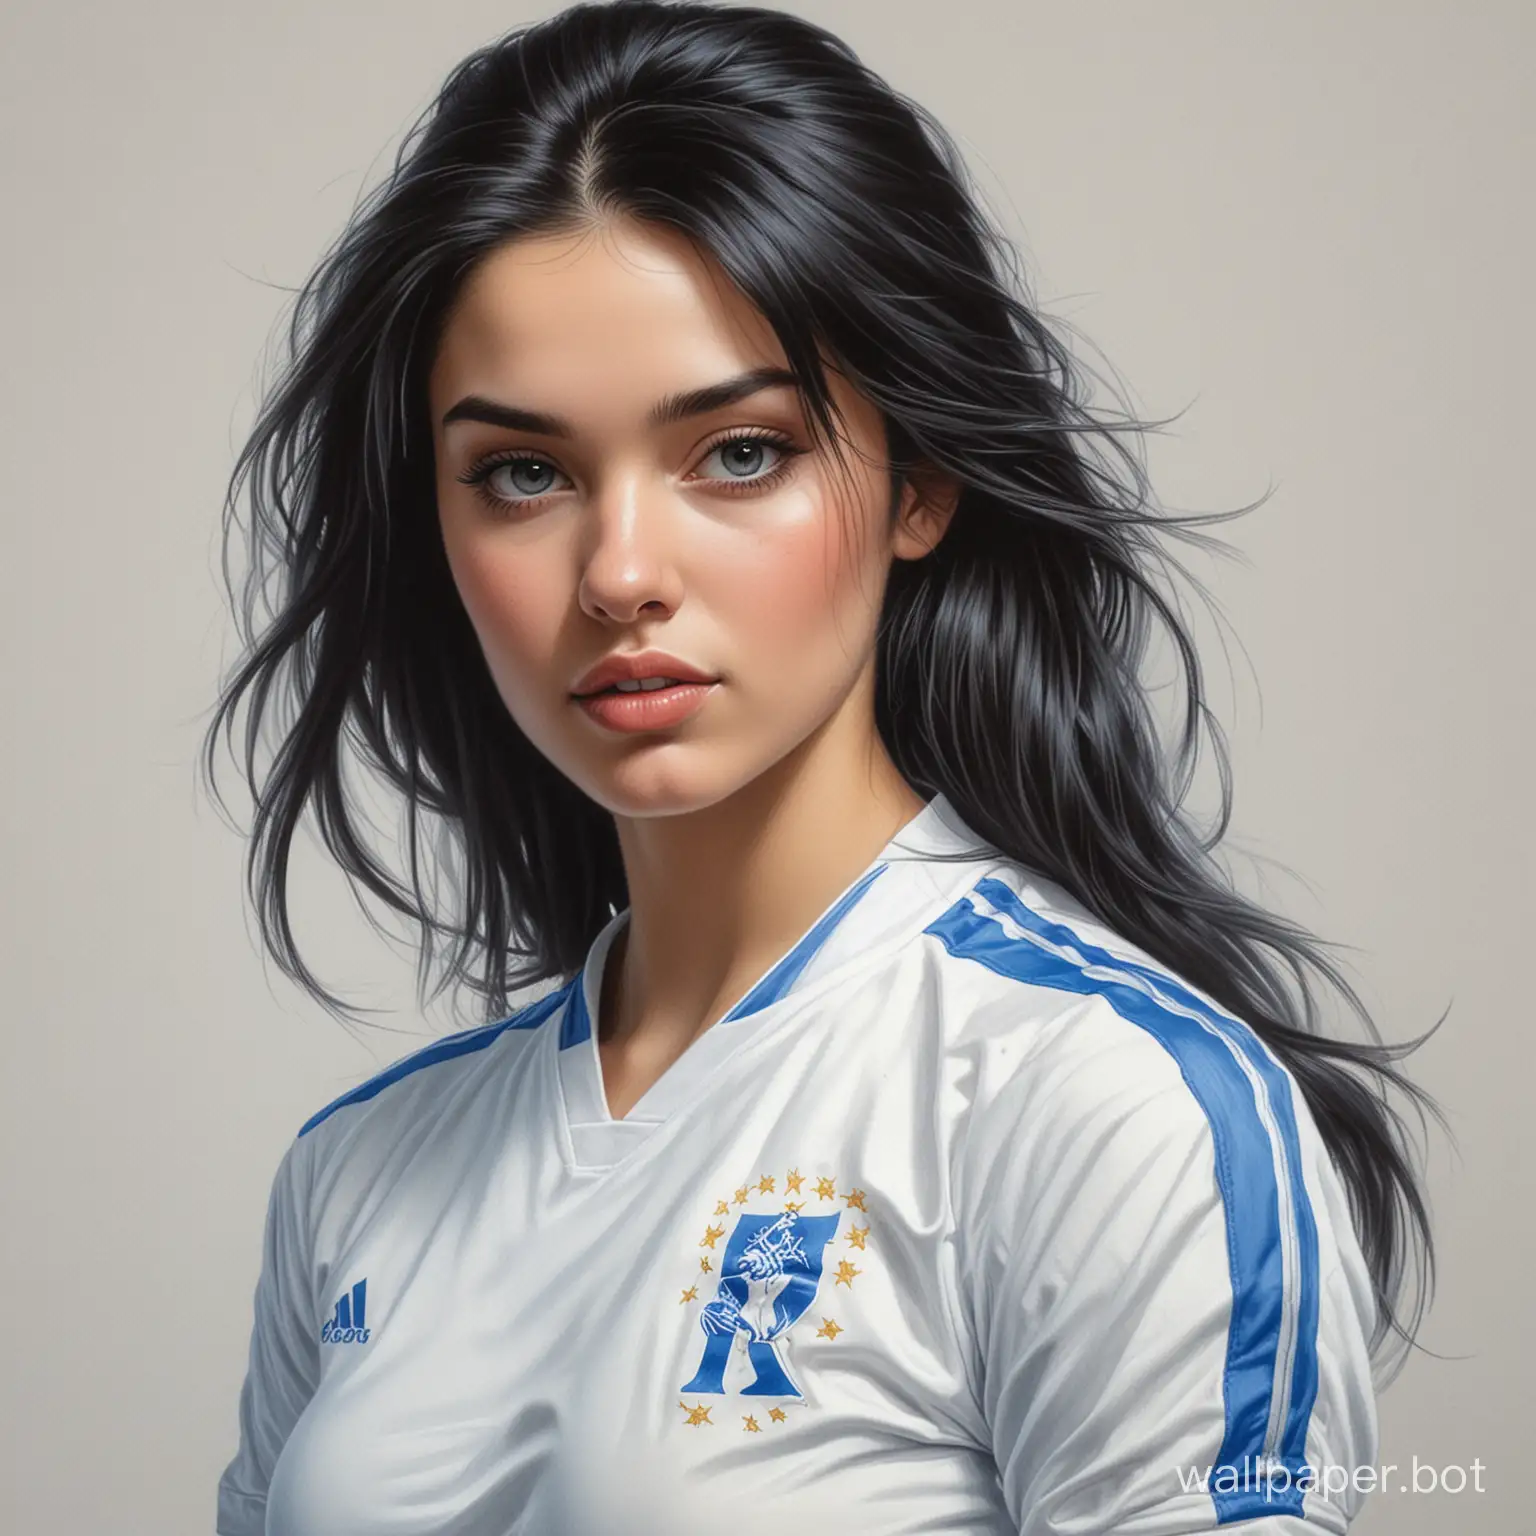 Realistic-Portrait-of-Young-Katerina-Shpitsa-in-Soccer-Attire